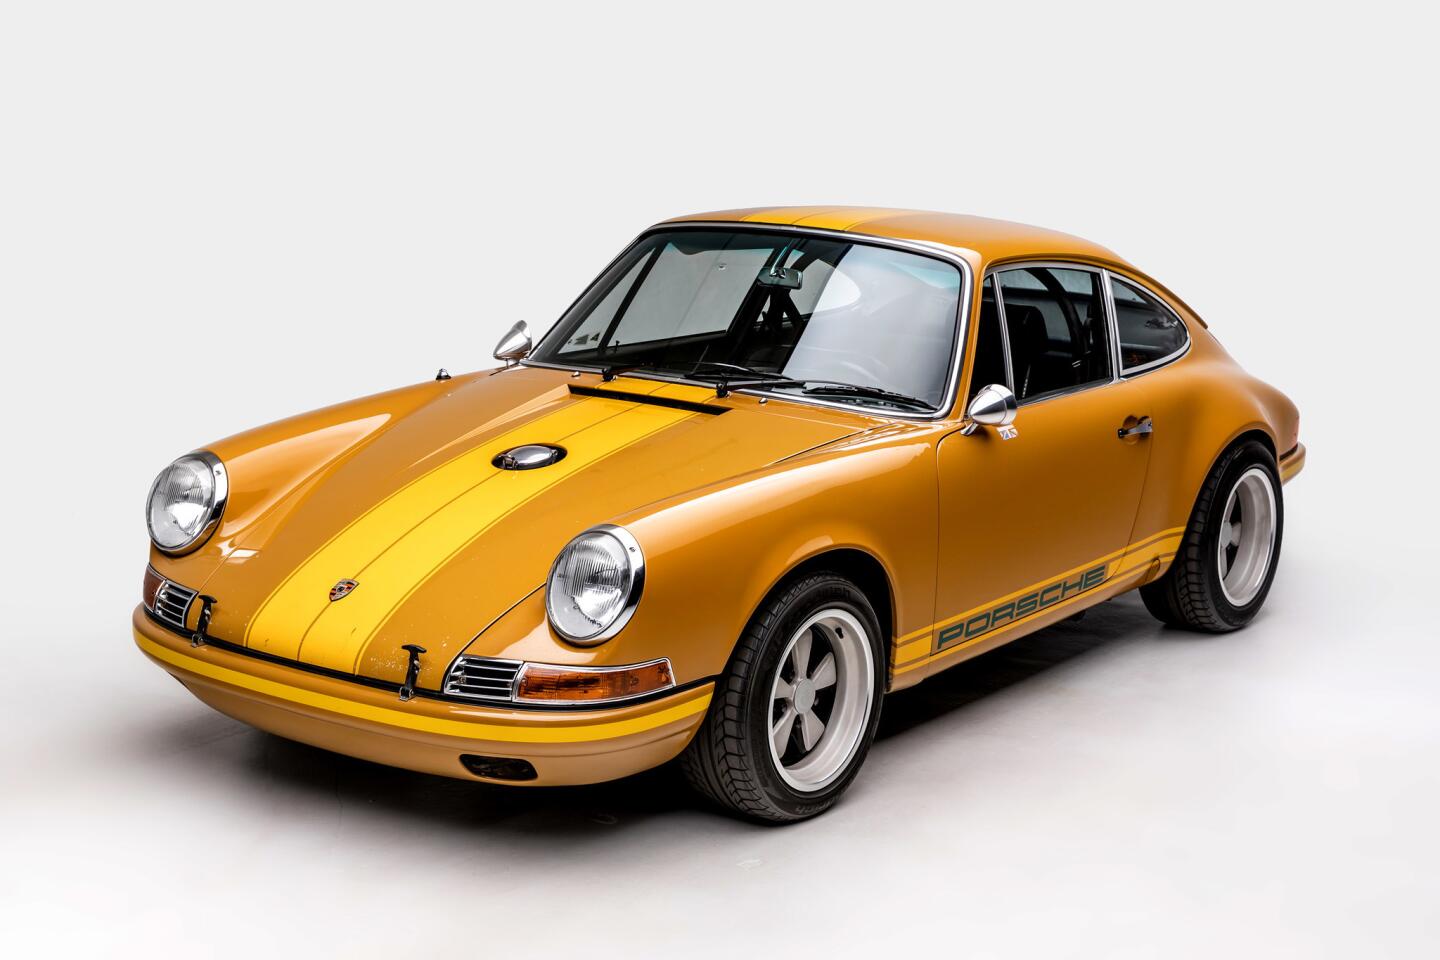 'Porsche Effect' exhibit opens at Petersen Automotive Museum